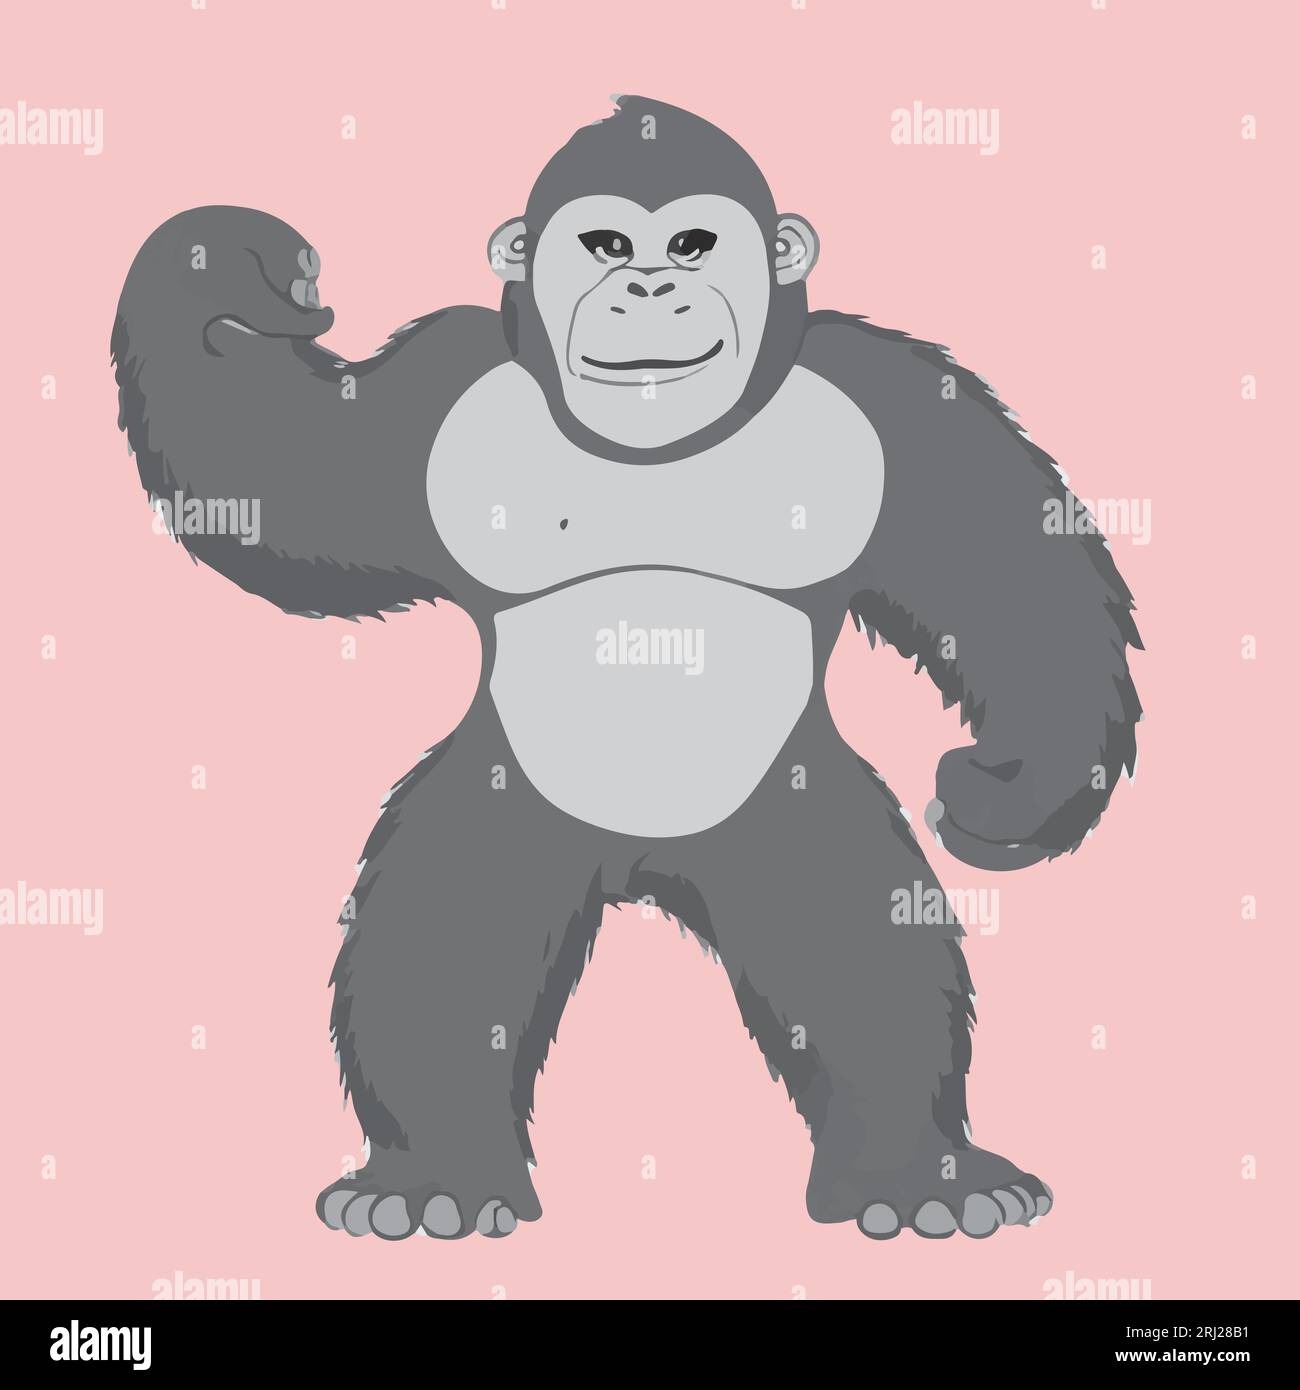 https://c8.alamy.com/comp/2RJ28B1/vector-graphic-illustration-of-smiling-gorila-perfect-for-icon-design-logo-design-t-shirt-design-etc-2RJ28B1.jpg